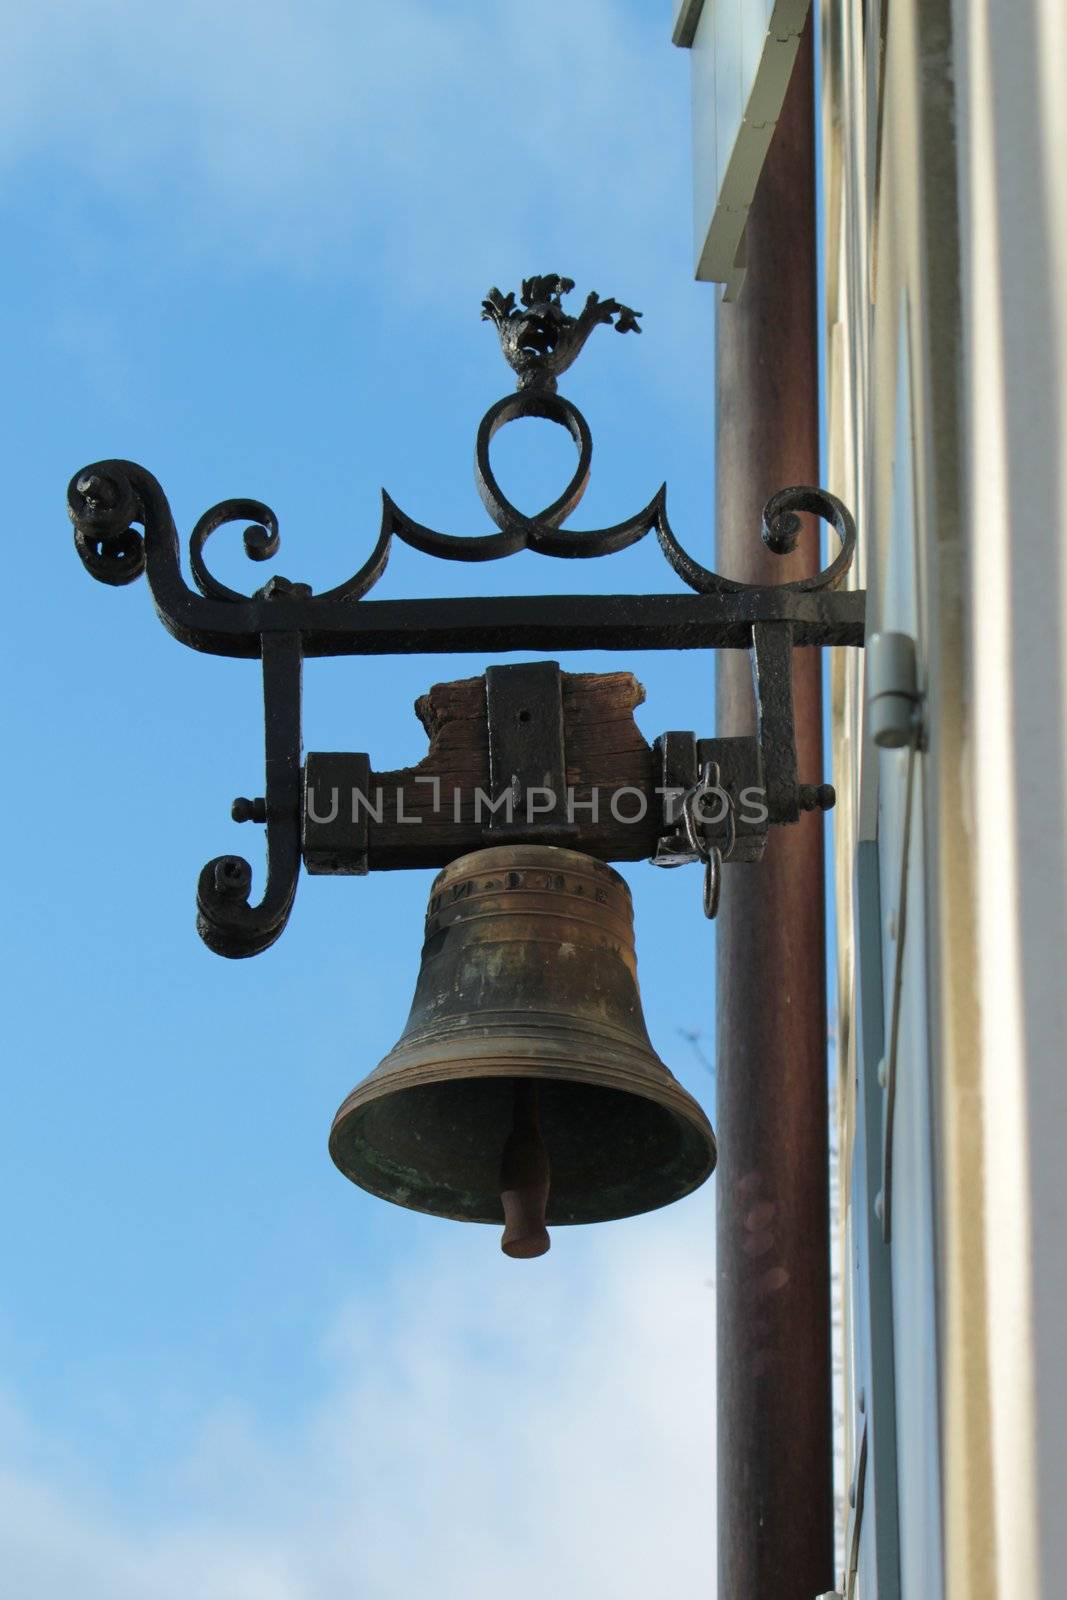 Old beautiful metallic bell on a wall